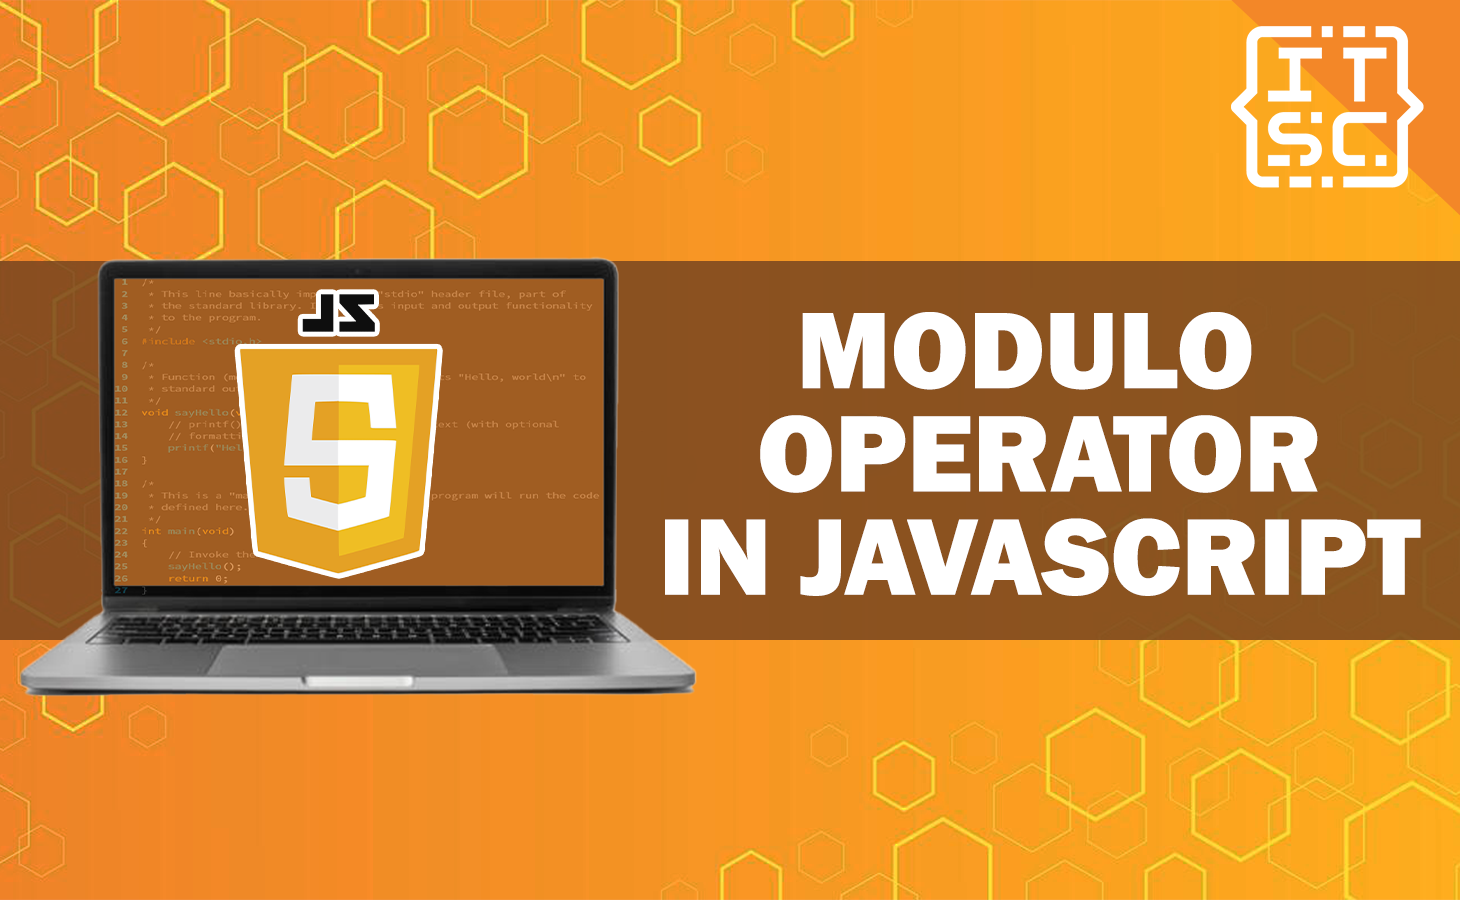 Modulo Operator in JavaScript